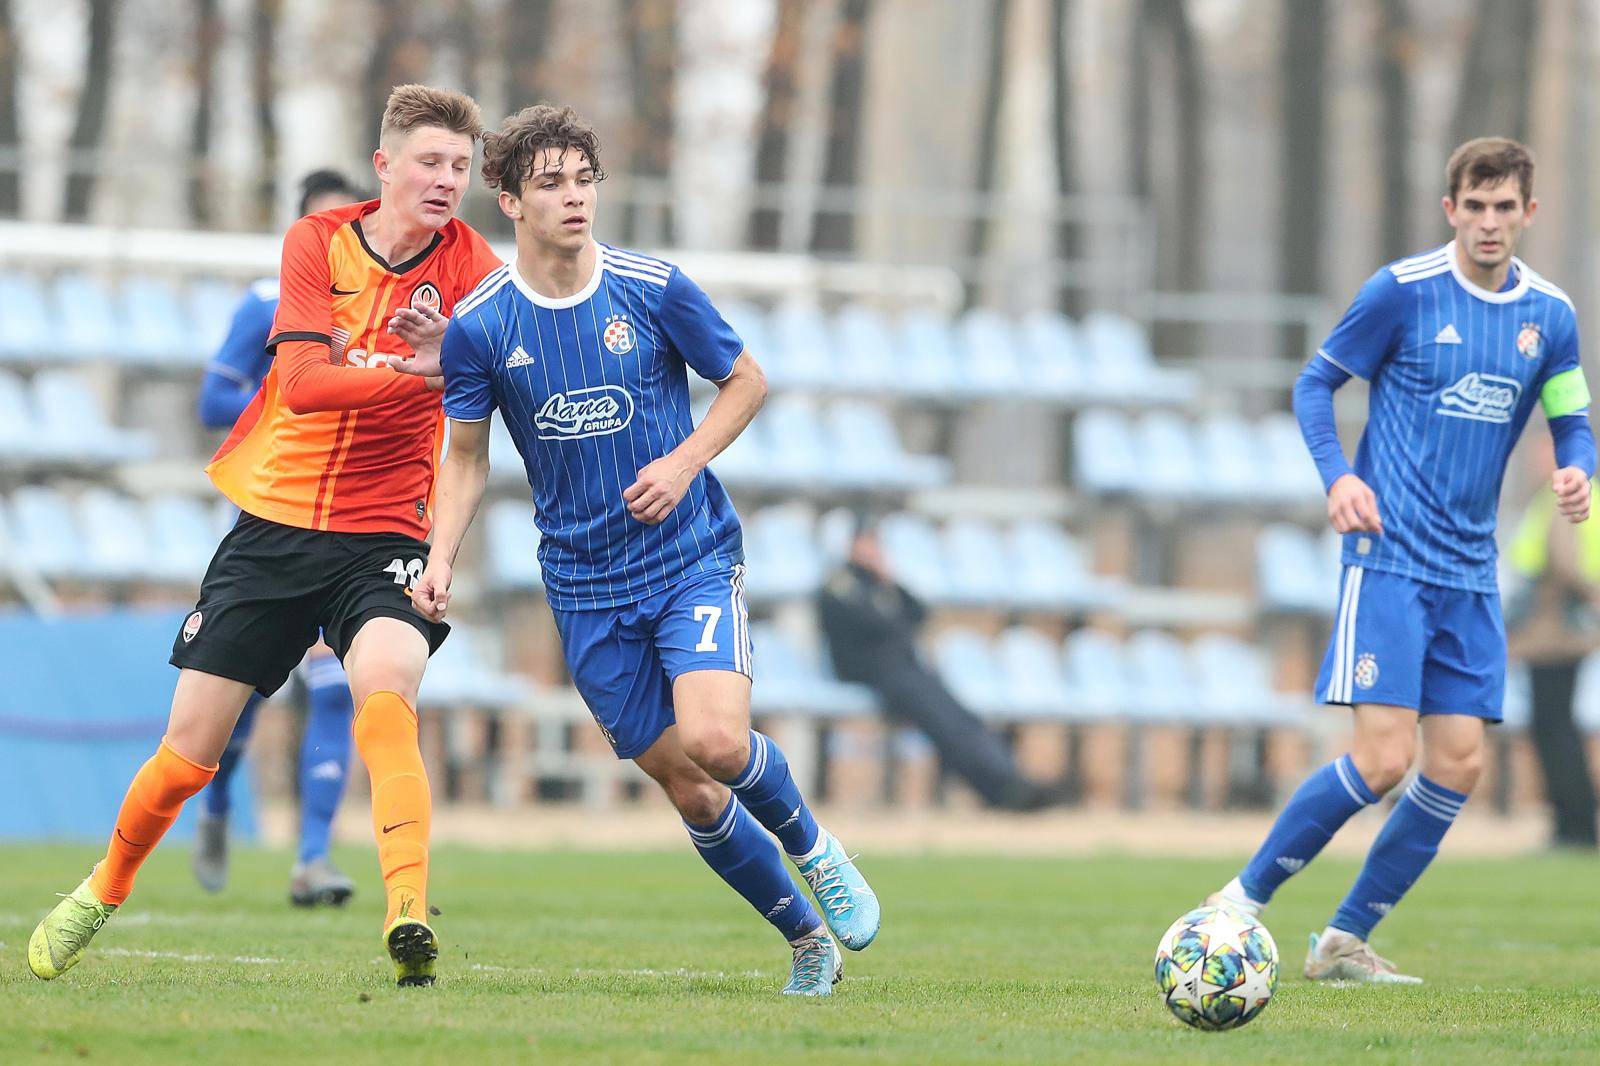 Harkiv: Liga prvaka mladih, skupina C, 3. kolo, FC Shakhtar Donetsk - GNK Dinamo